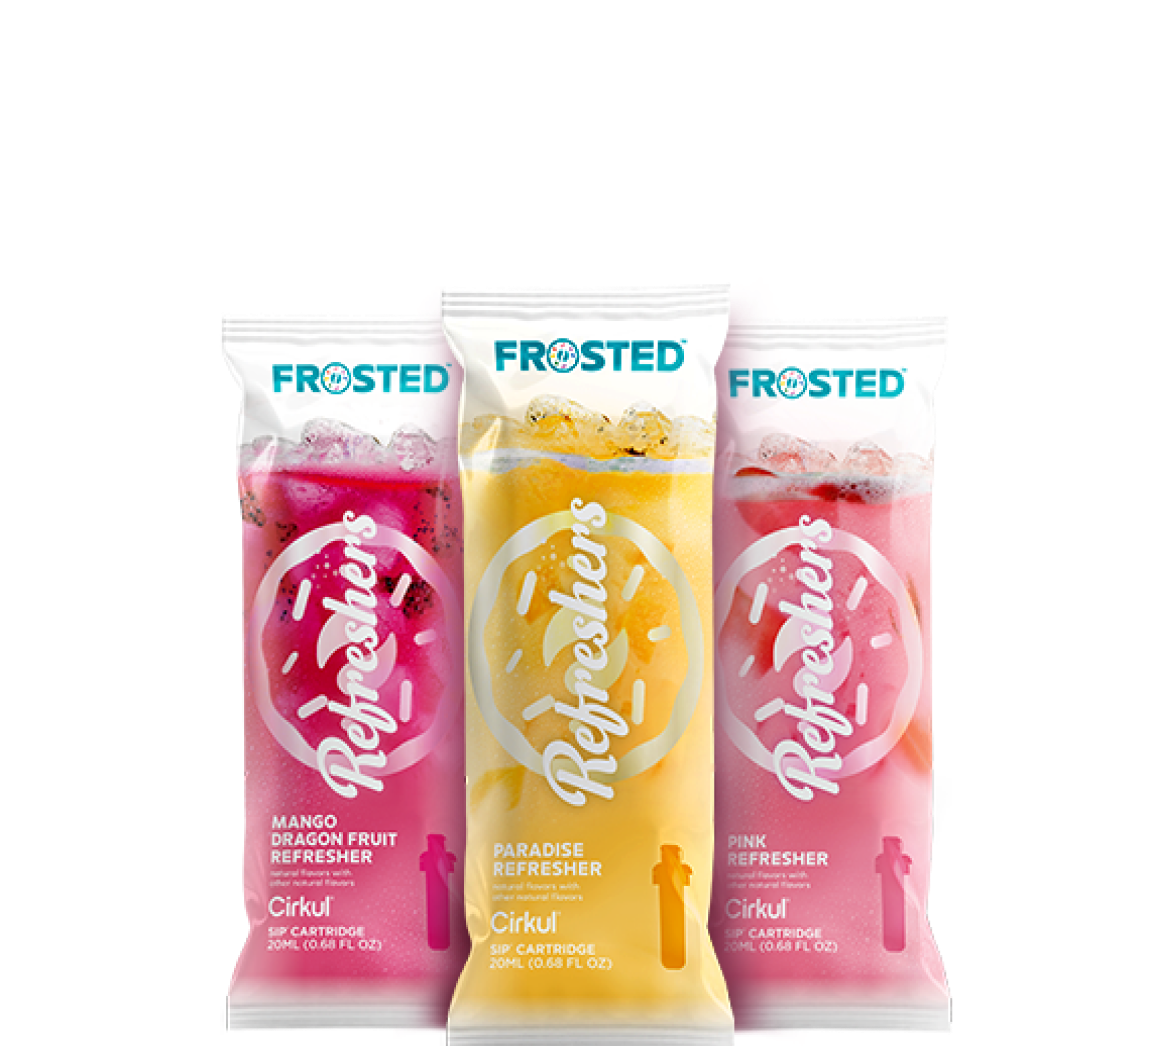 Frosted Refreshers Mango Dragon Fruit Refresher, Frosted Refreshers Paradise Refresher, and Frosted Refreshers Pink Refresher